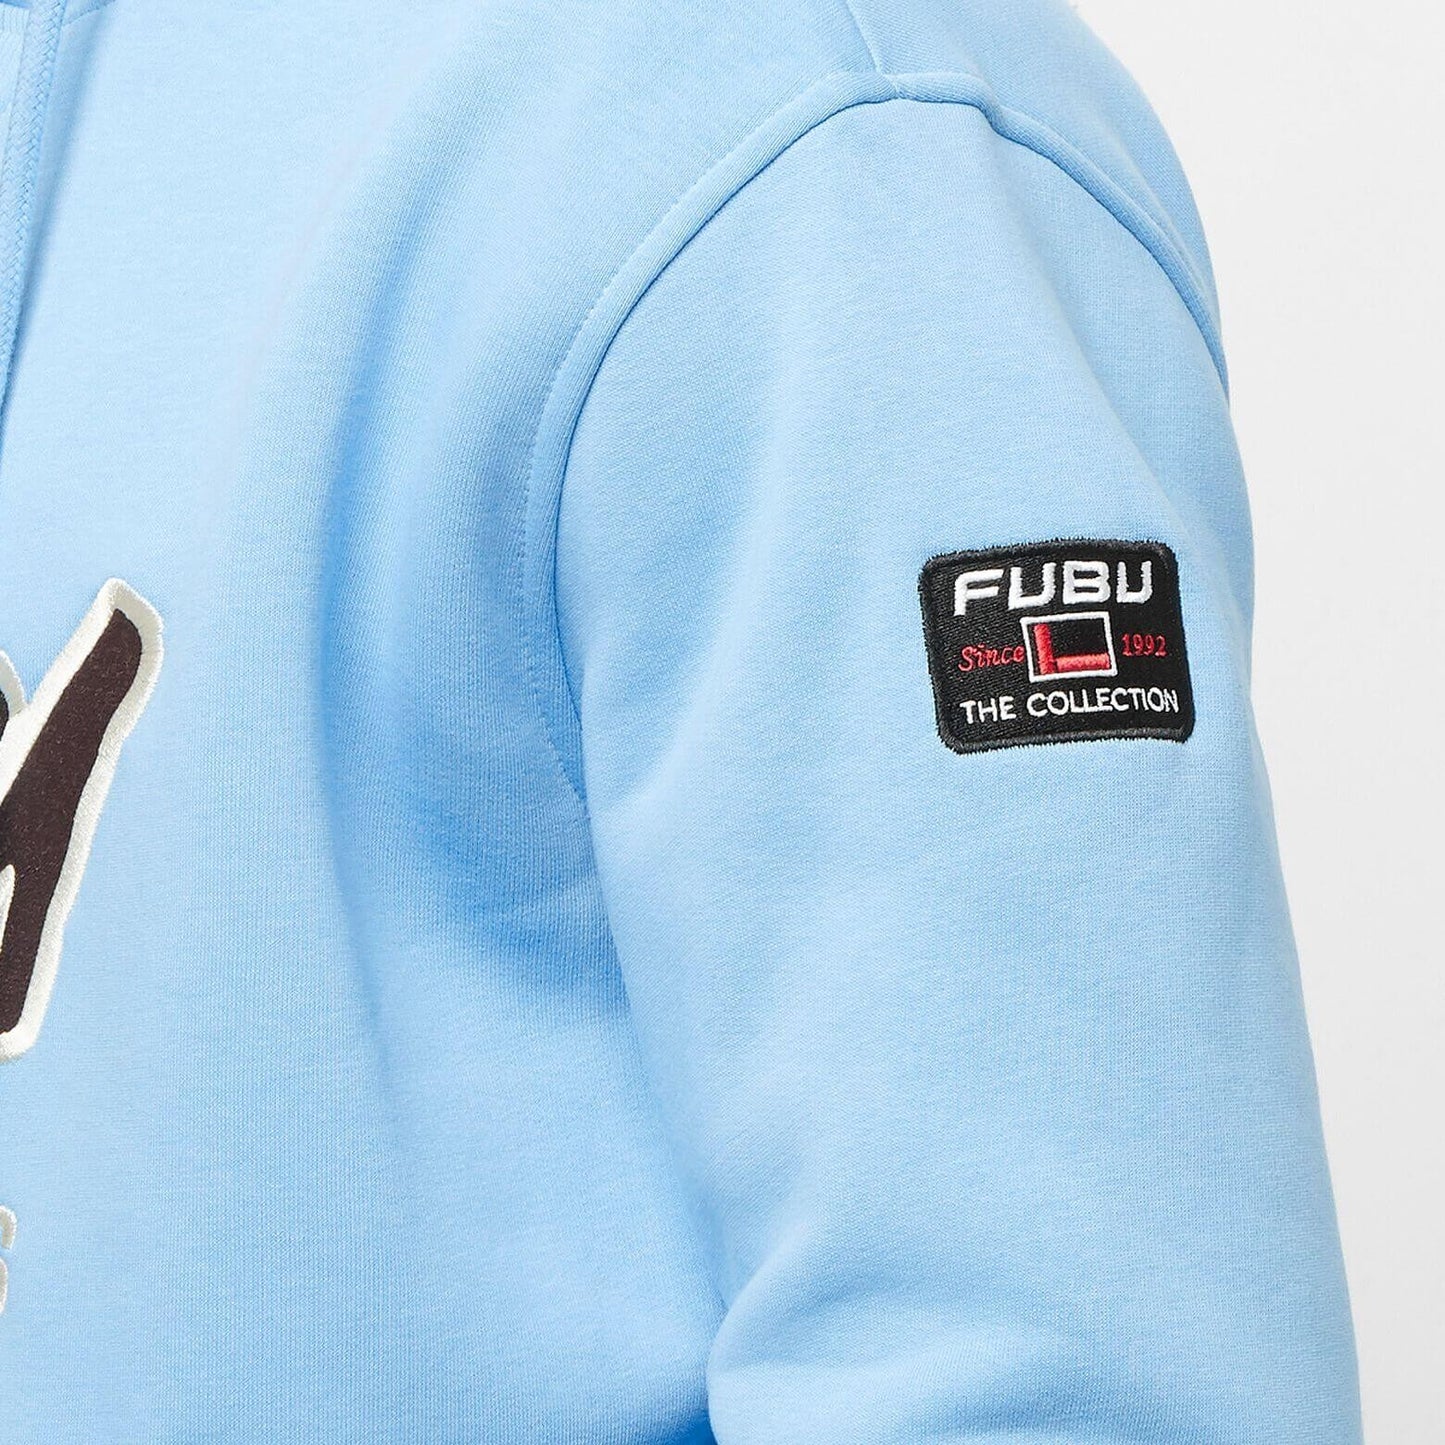 FUBU Sprts Hooded Sweatshirt light blue/brown/off white